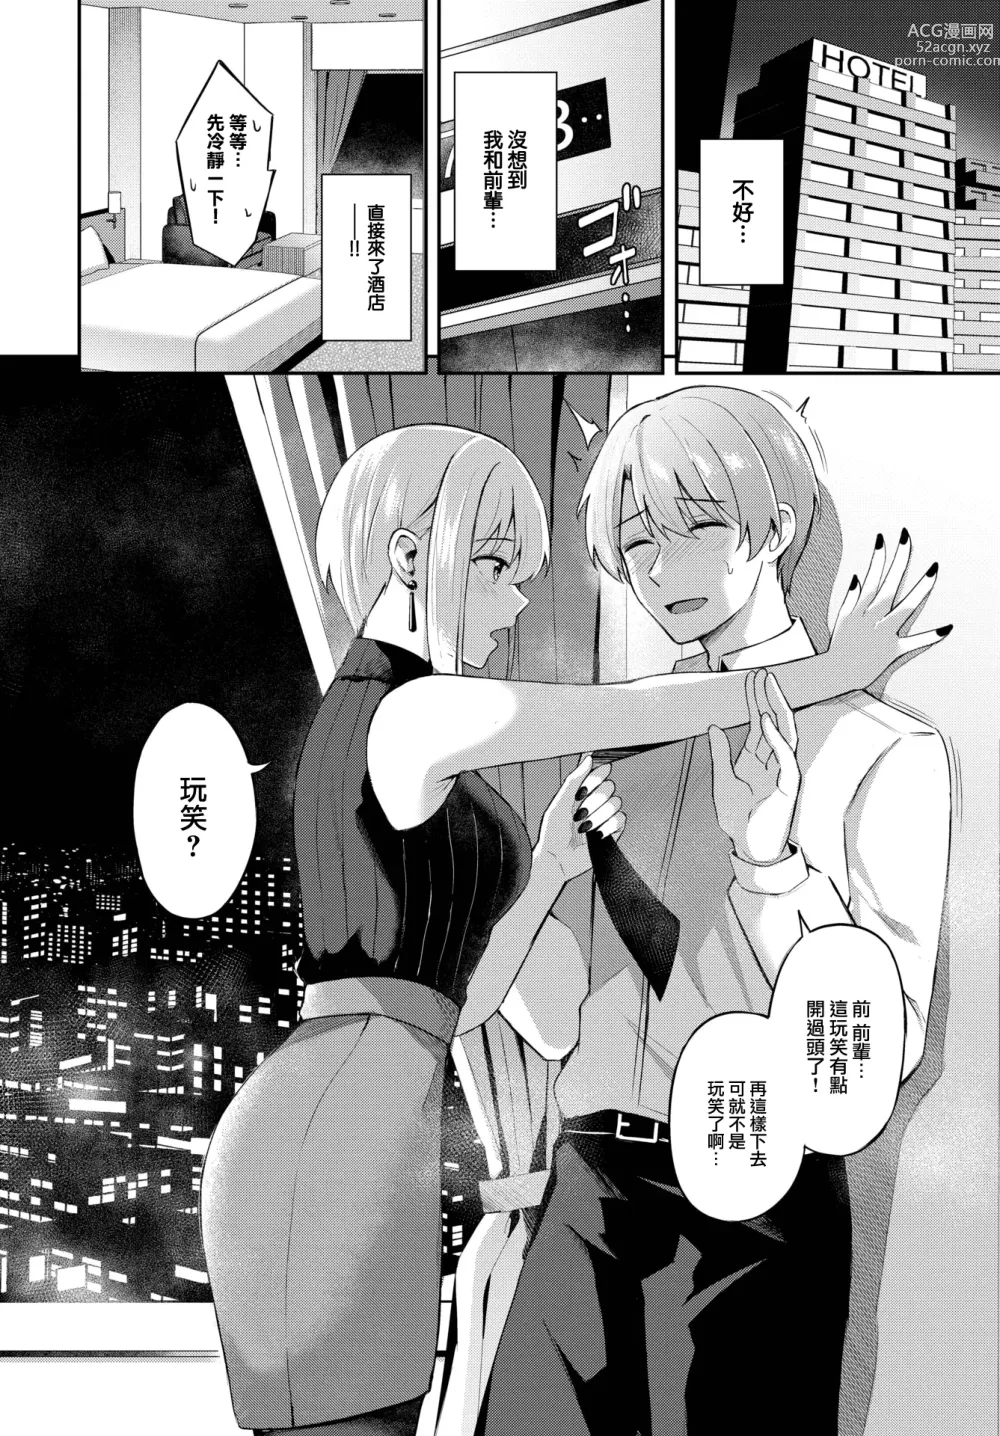 Page 7 of manga Namaiki Senpai